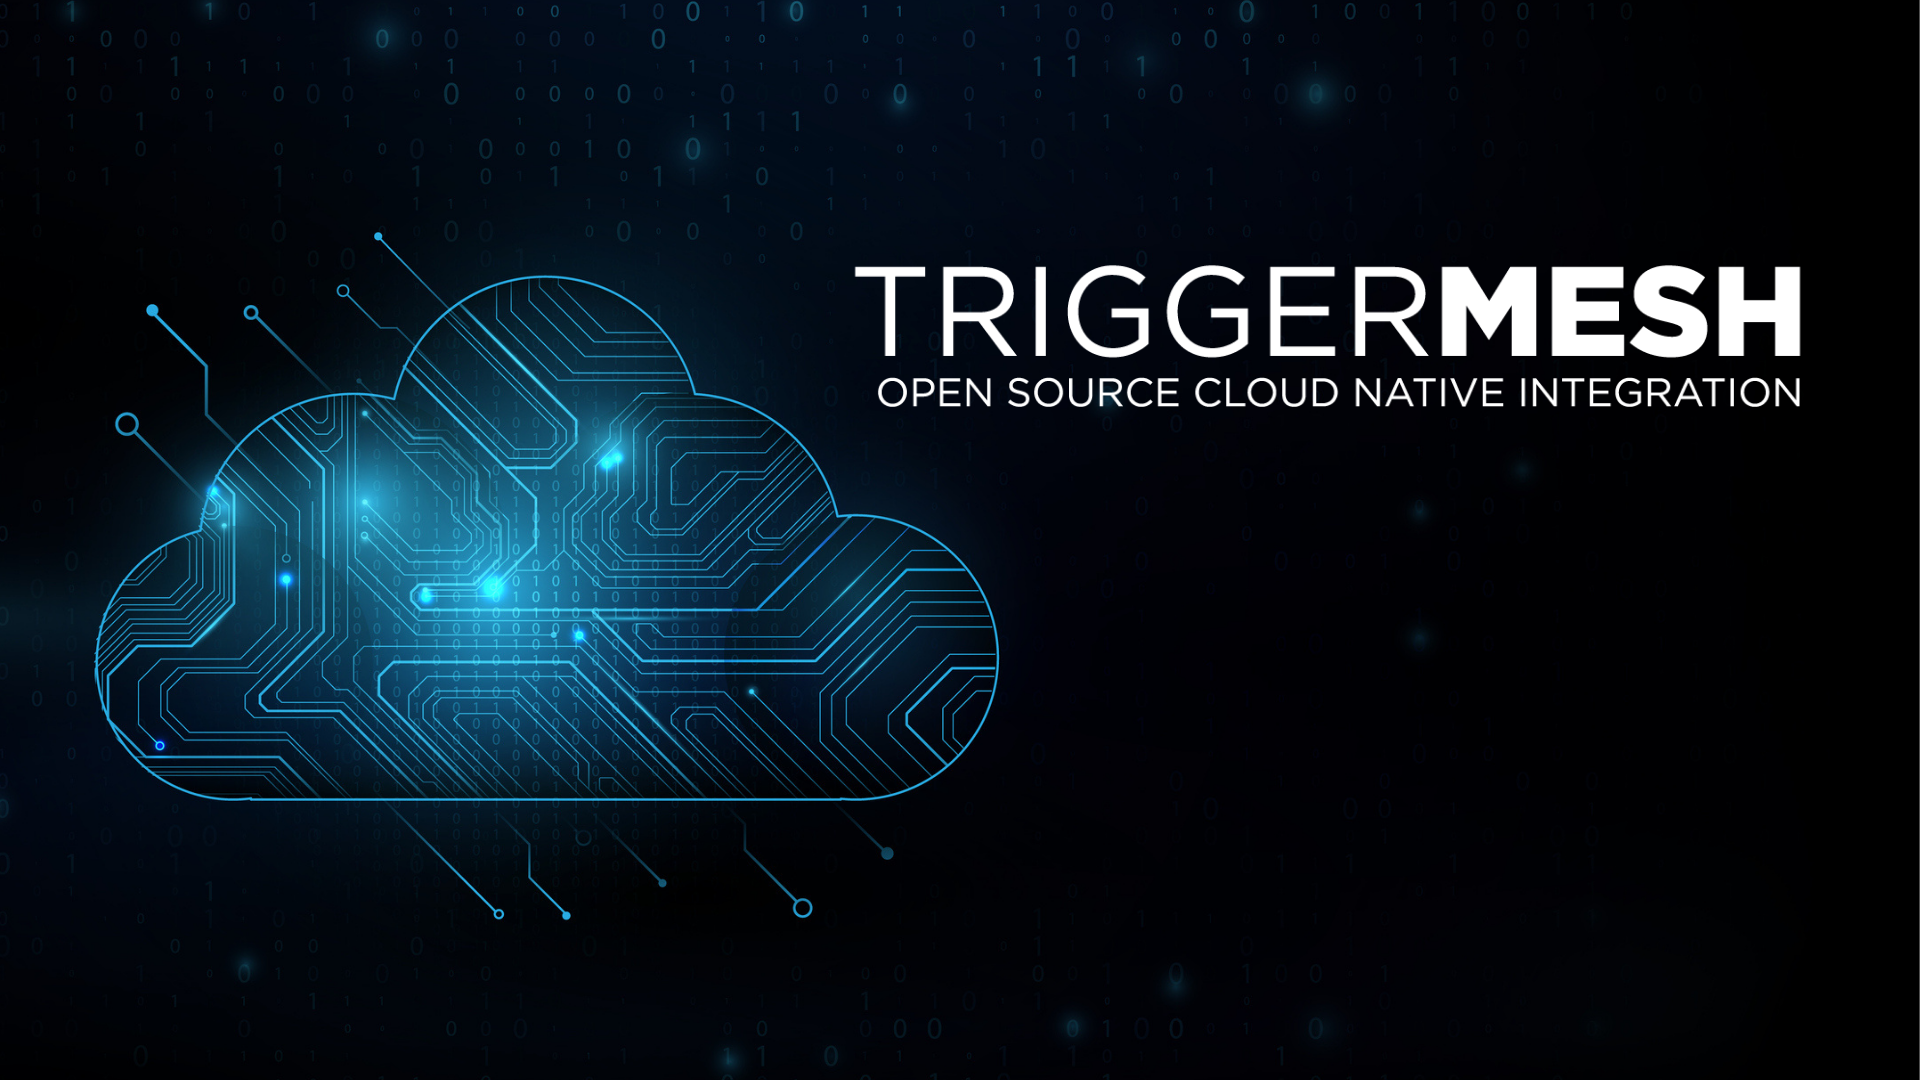 Triggermesh 云原生集成平台宣布开源